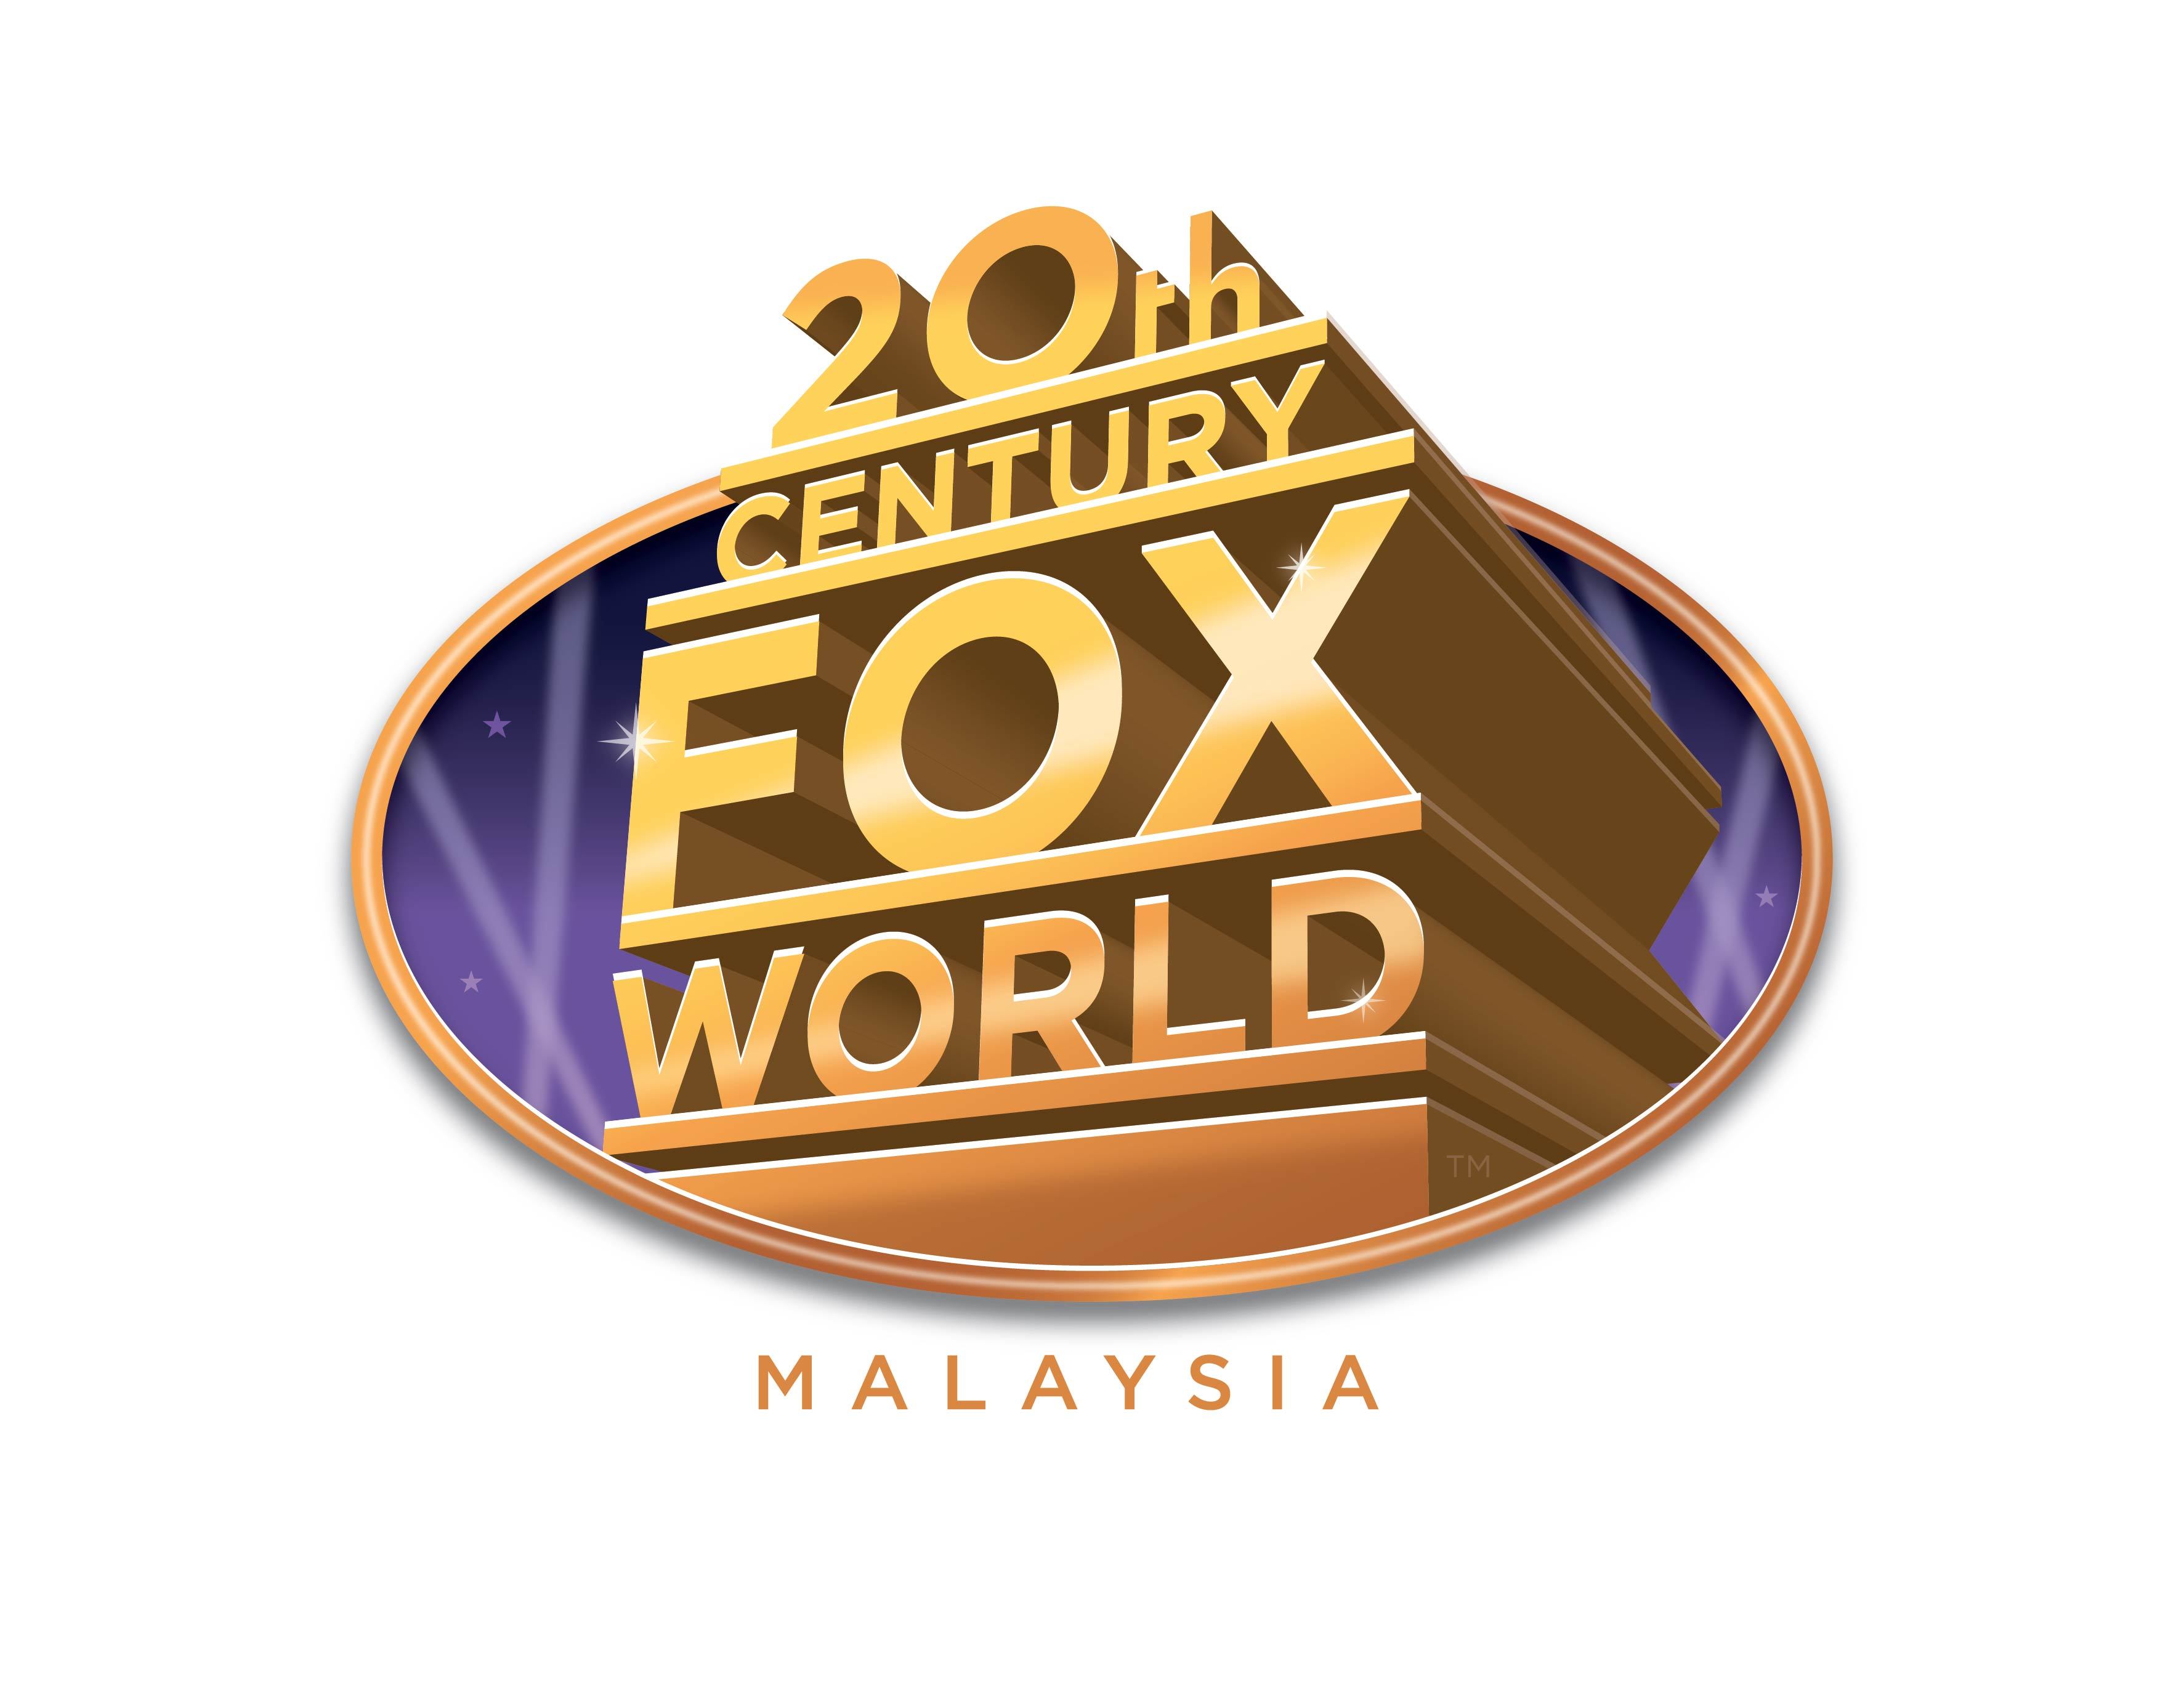 20 th fox. 20 Век Центури Фокс. Студия 20th Century Fox. 20th Century Fox logo. 20 Rh Century Fox.